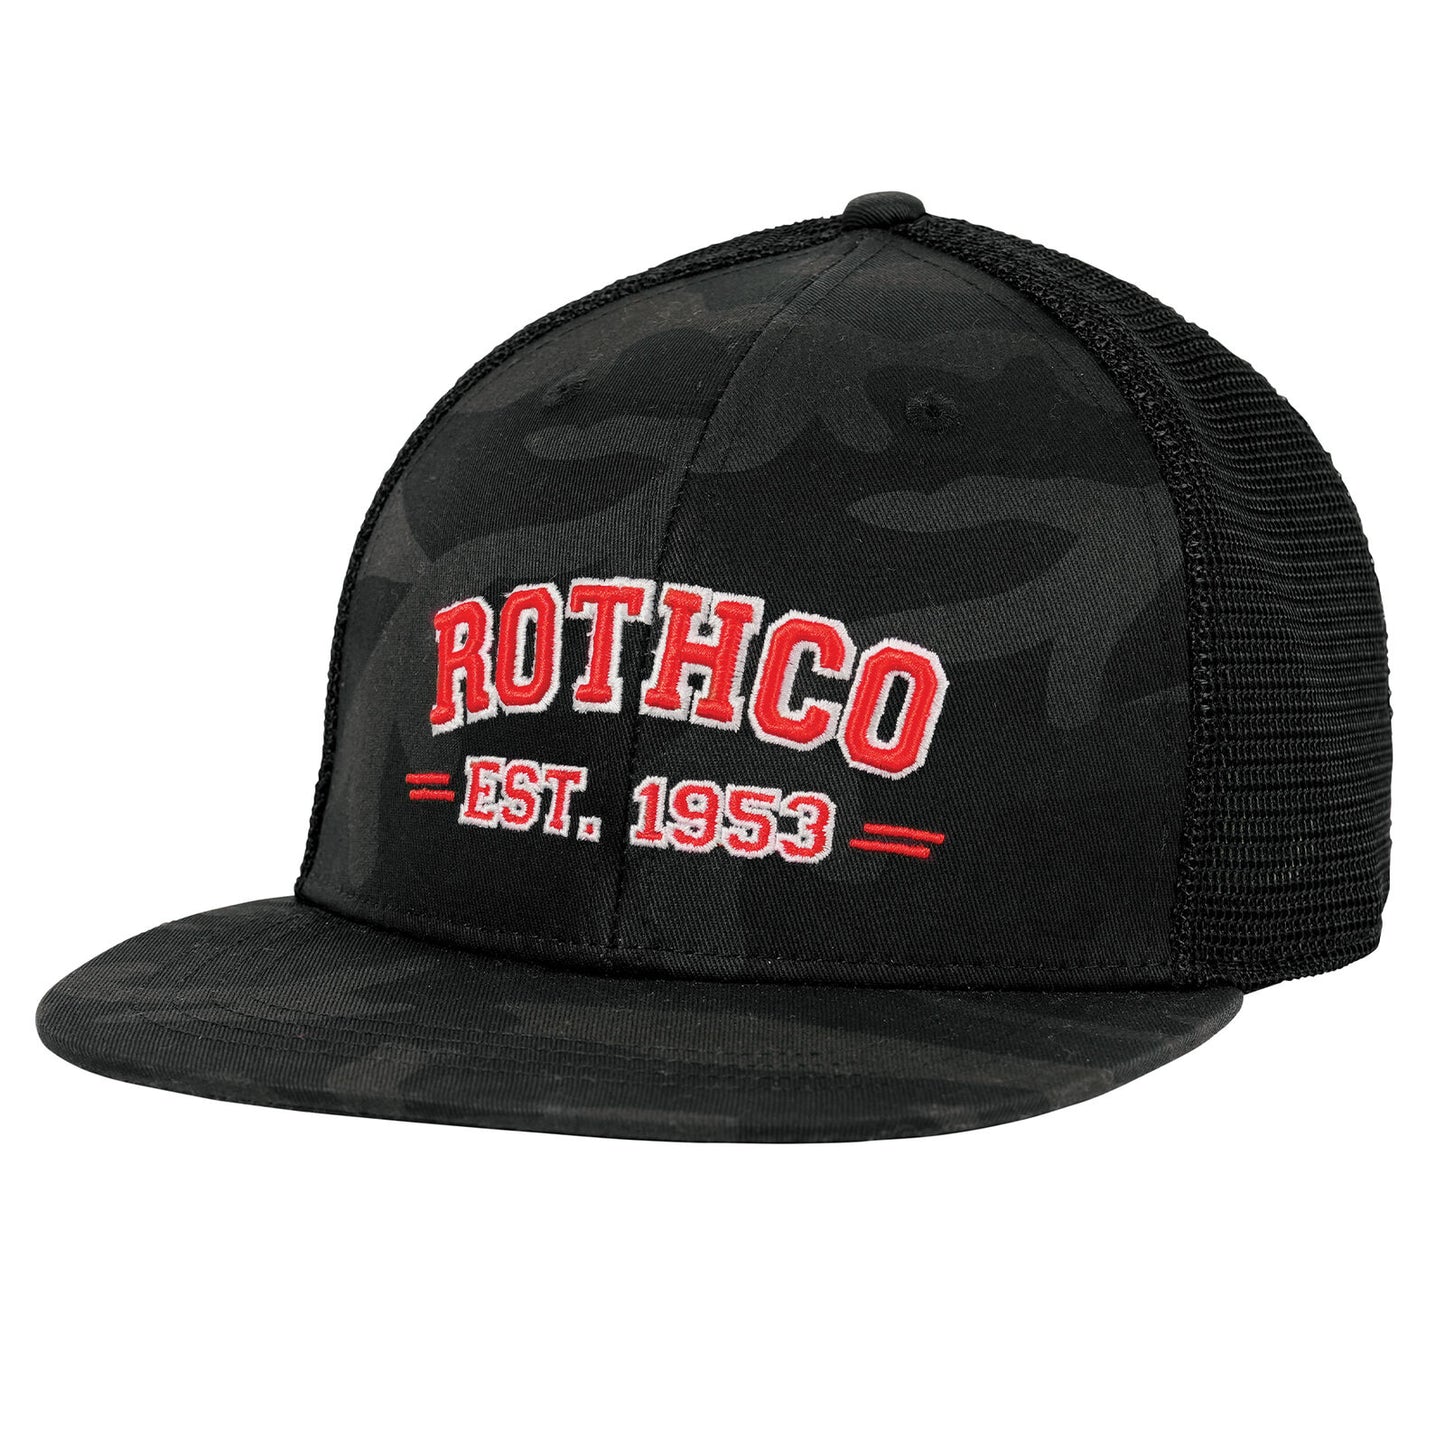 Rothco Est. 1953 Embroidered Midnight Black Camo Trucker Hat Baseball Cap